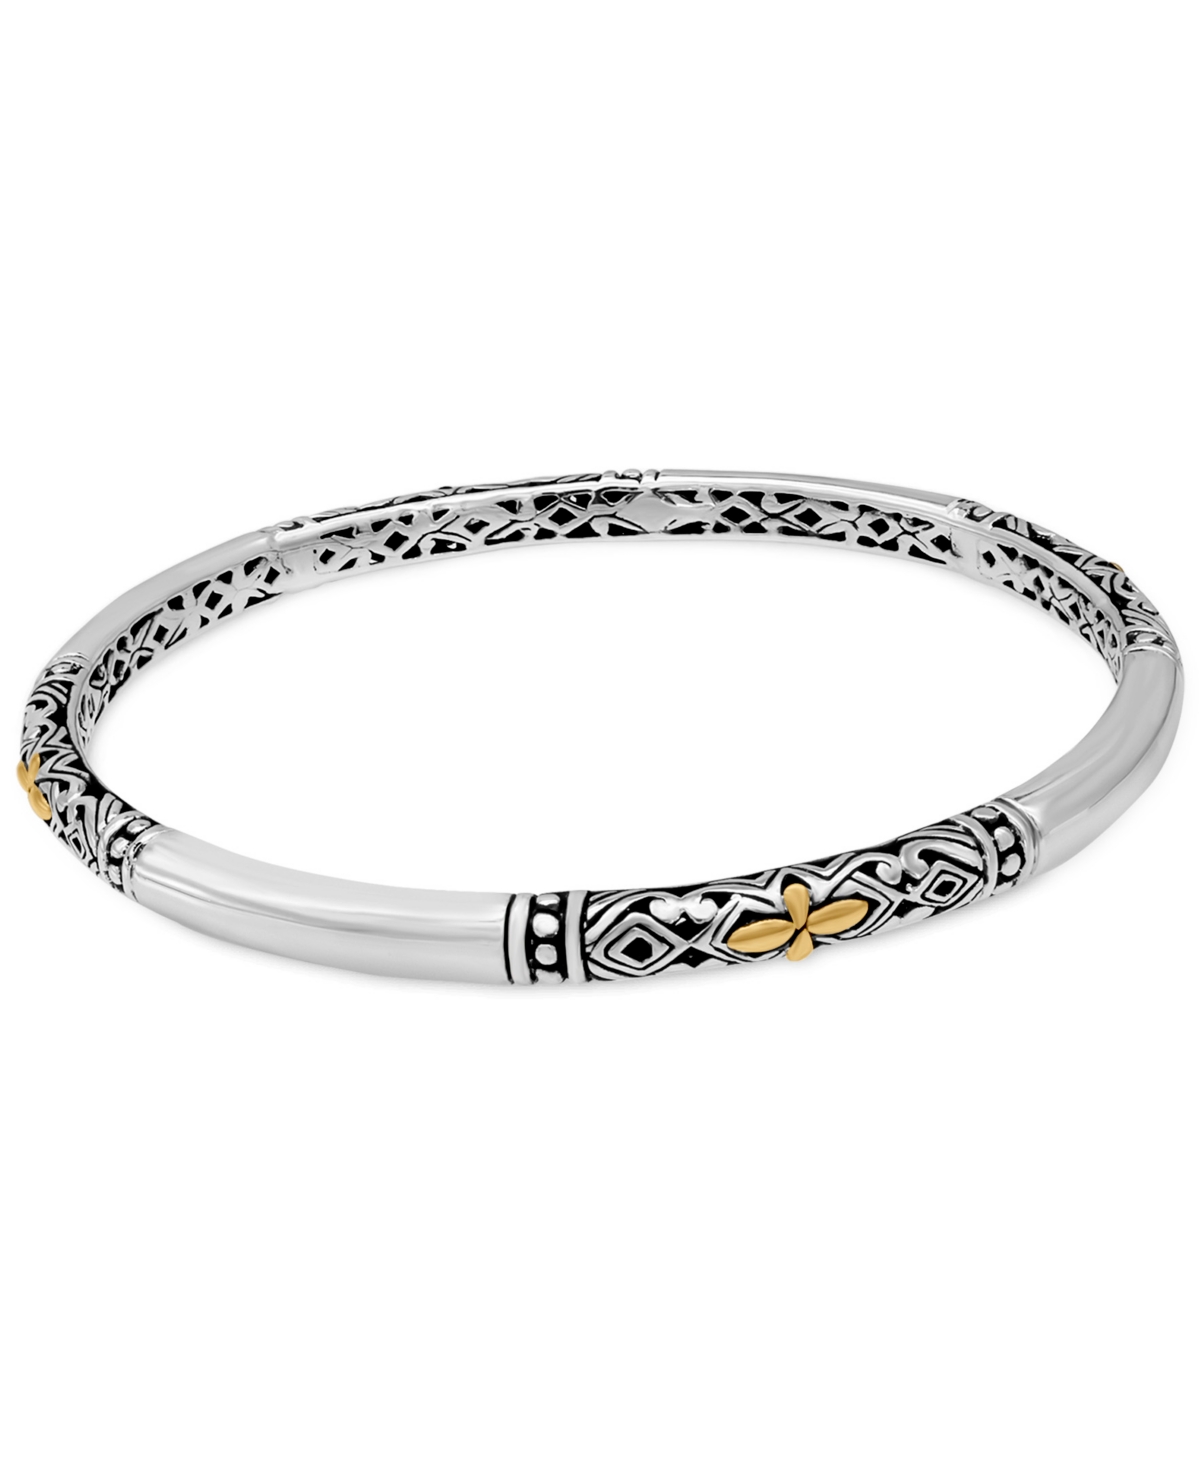 Bali Filigree Bangle Bracelet in Sterling Silver and 18K Gold - Silver